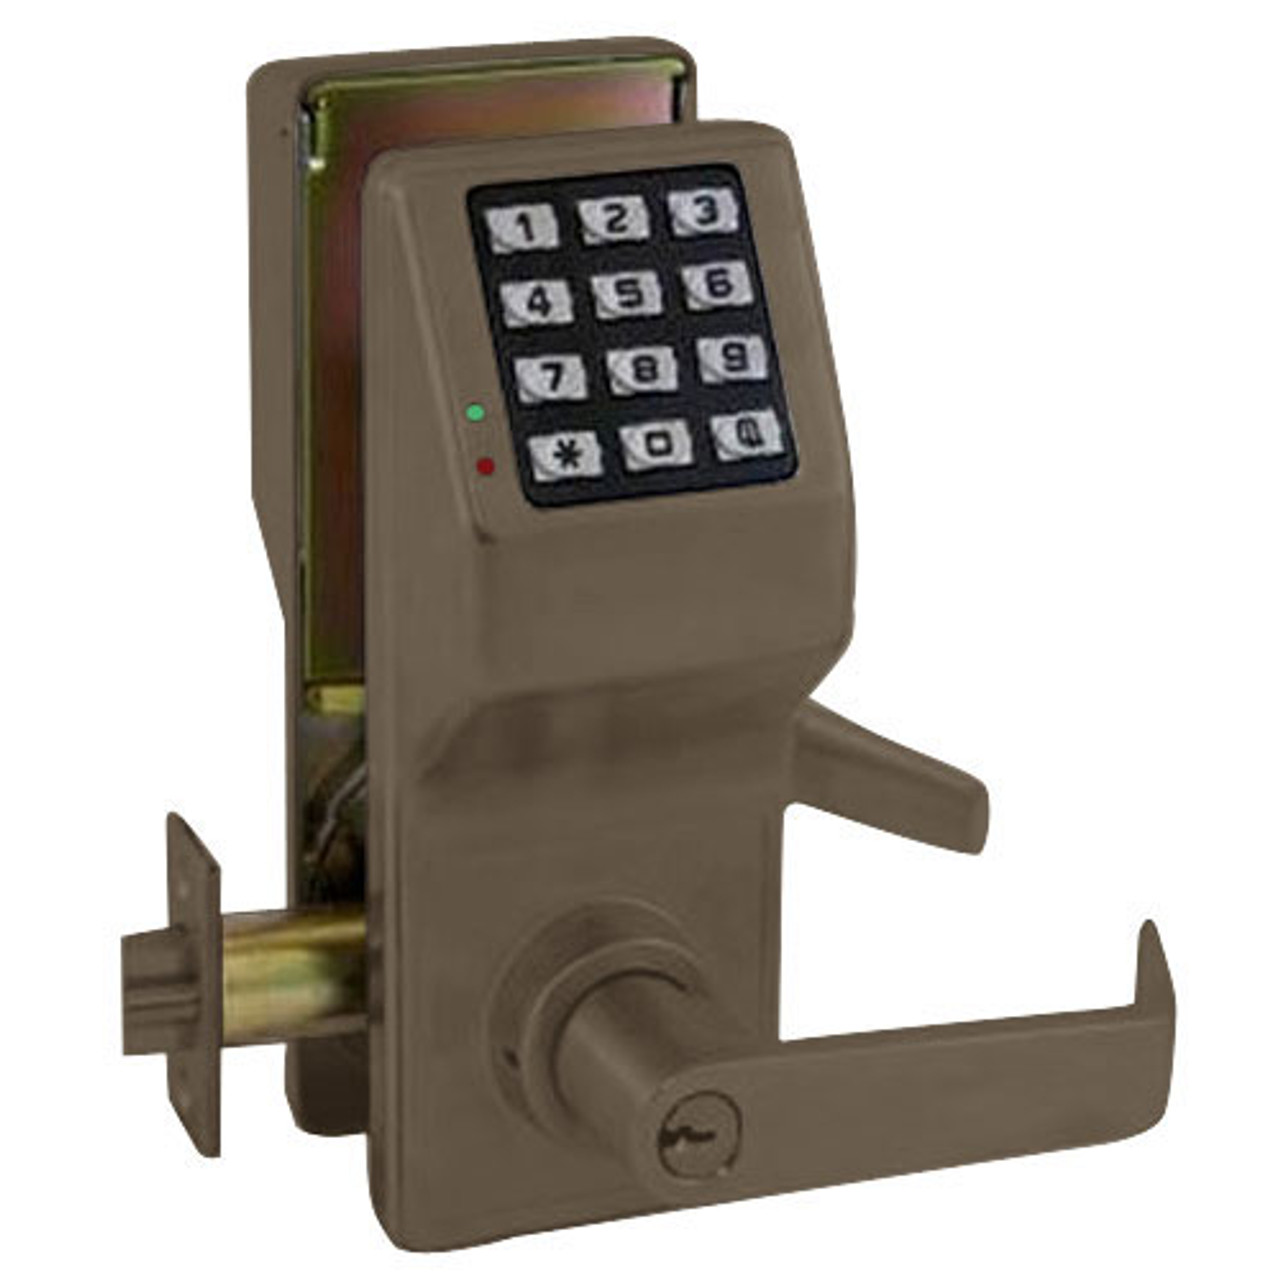 DL5300IC-US10B Alarm Lock Trilogy Electronic Digital Lock in Duronodic Finish